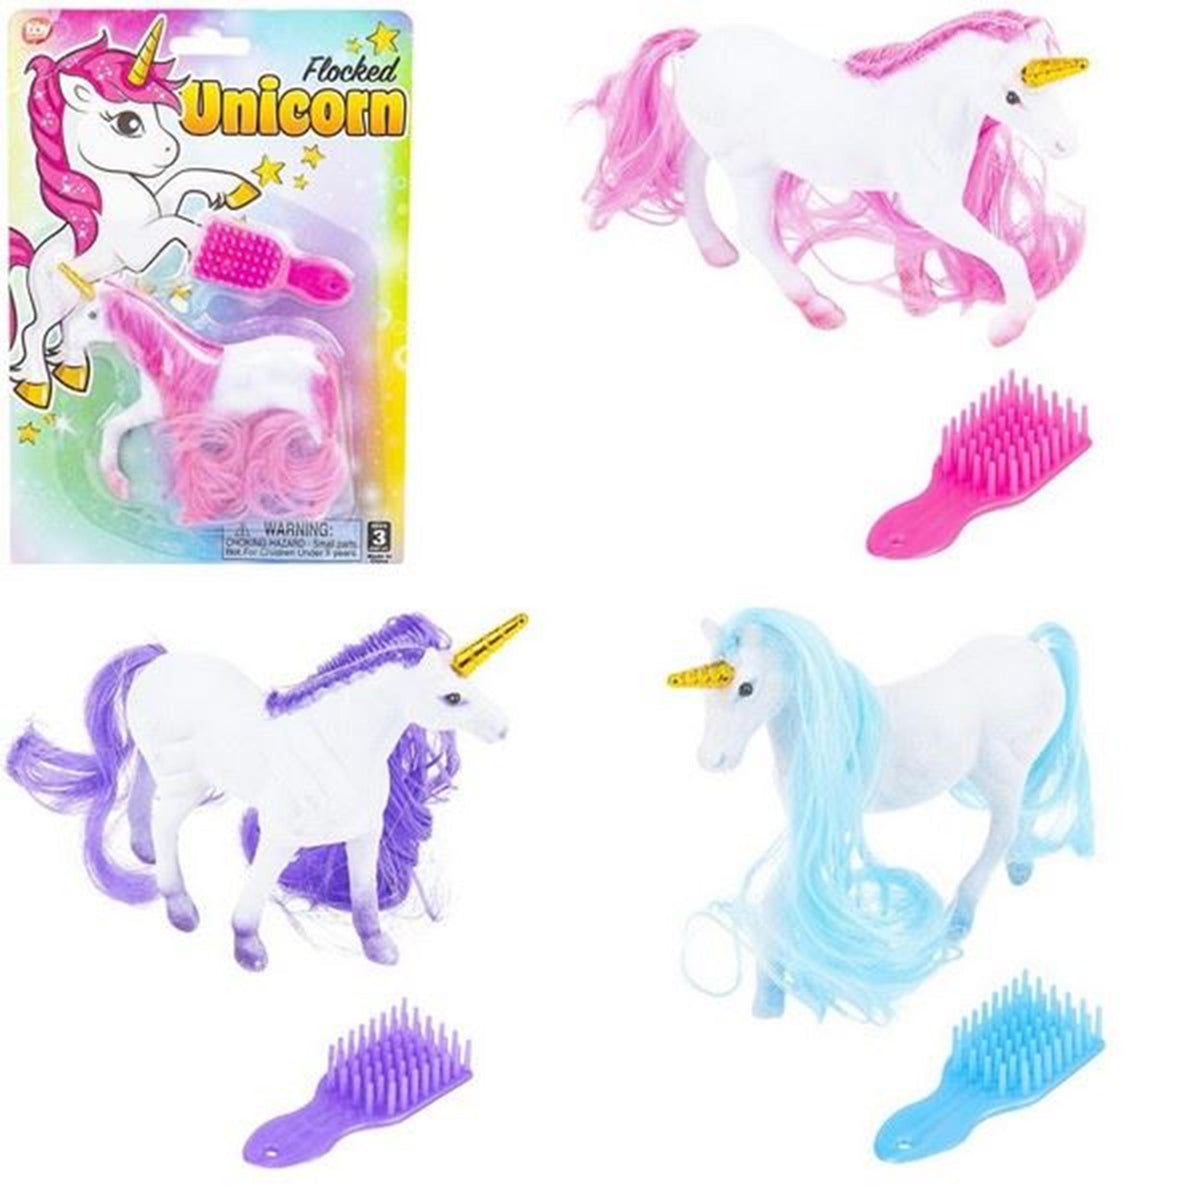 Flocked Unicorn Play Setkids toys In Bulk- Assorted